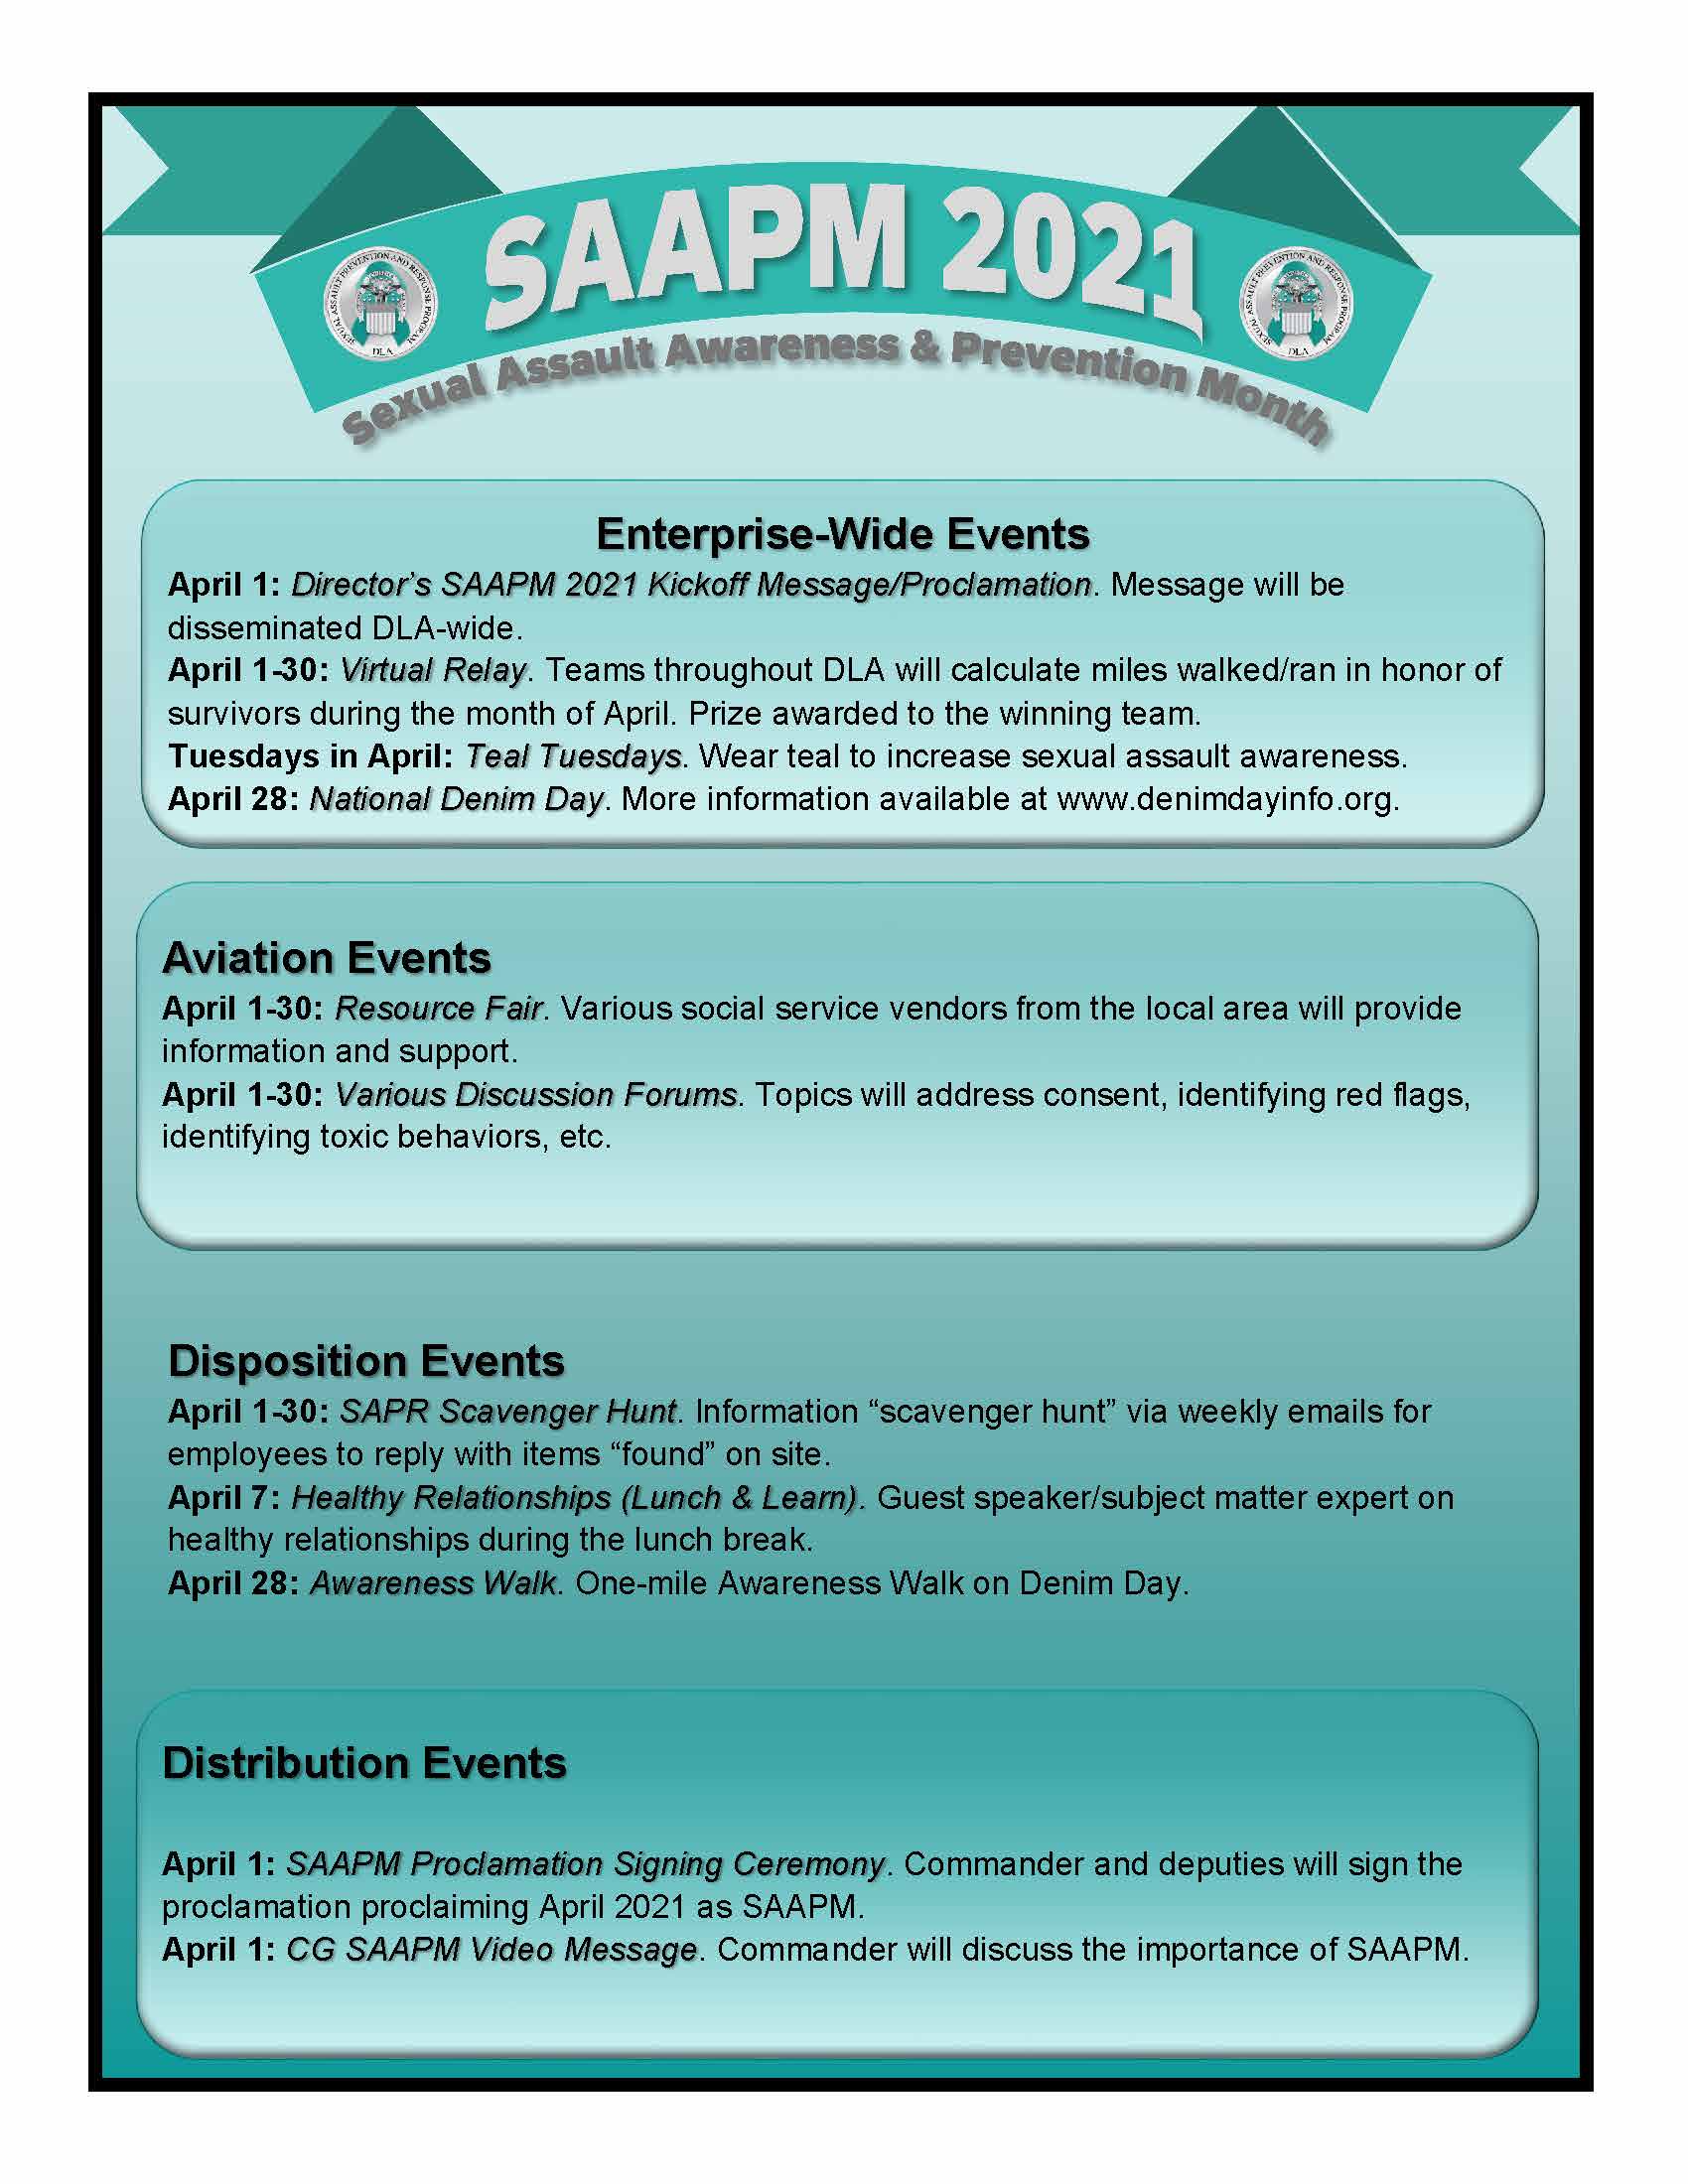 SAAPM Enterprisewide Events